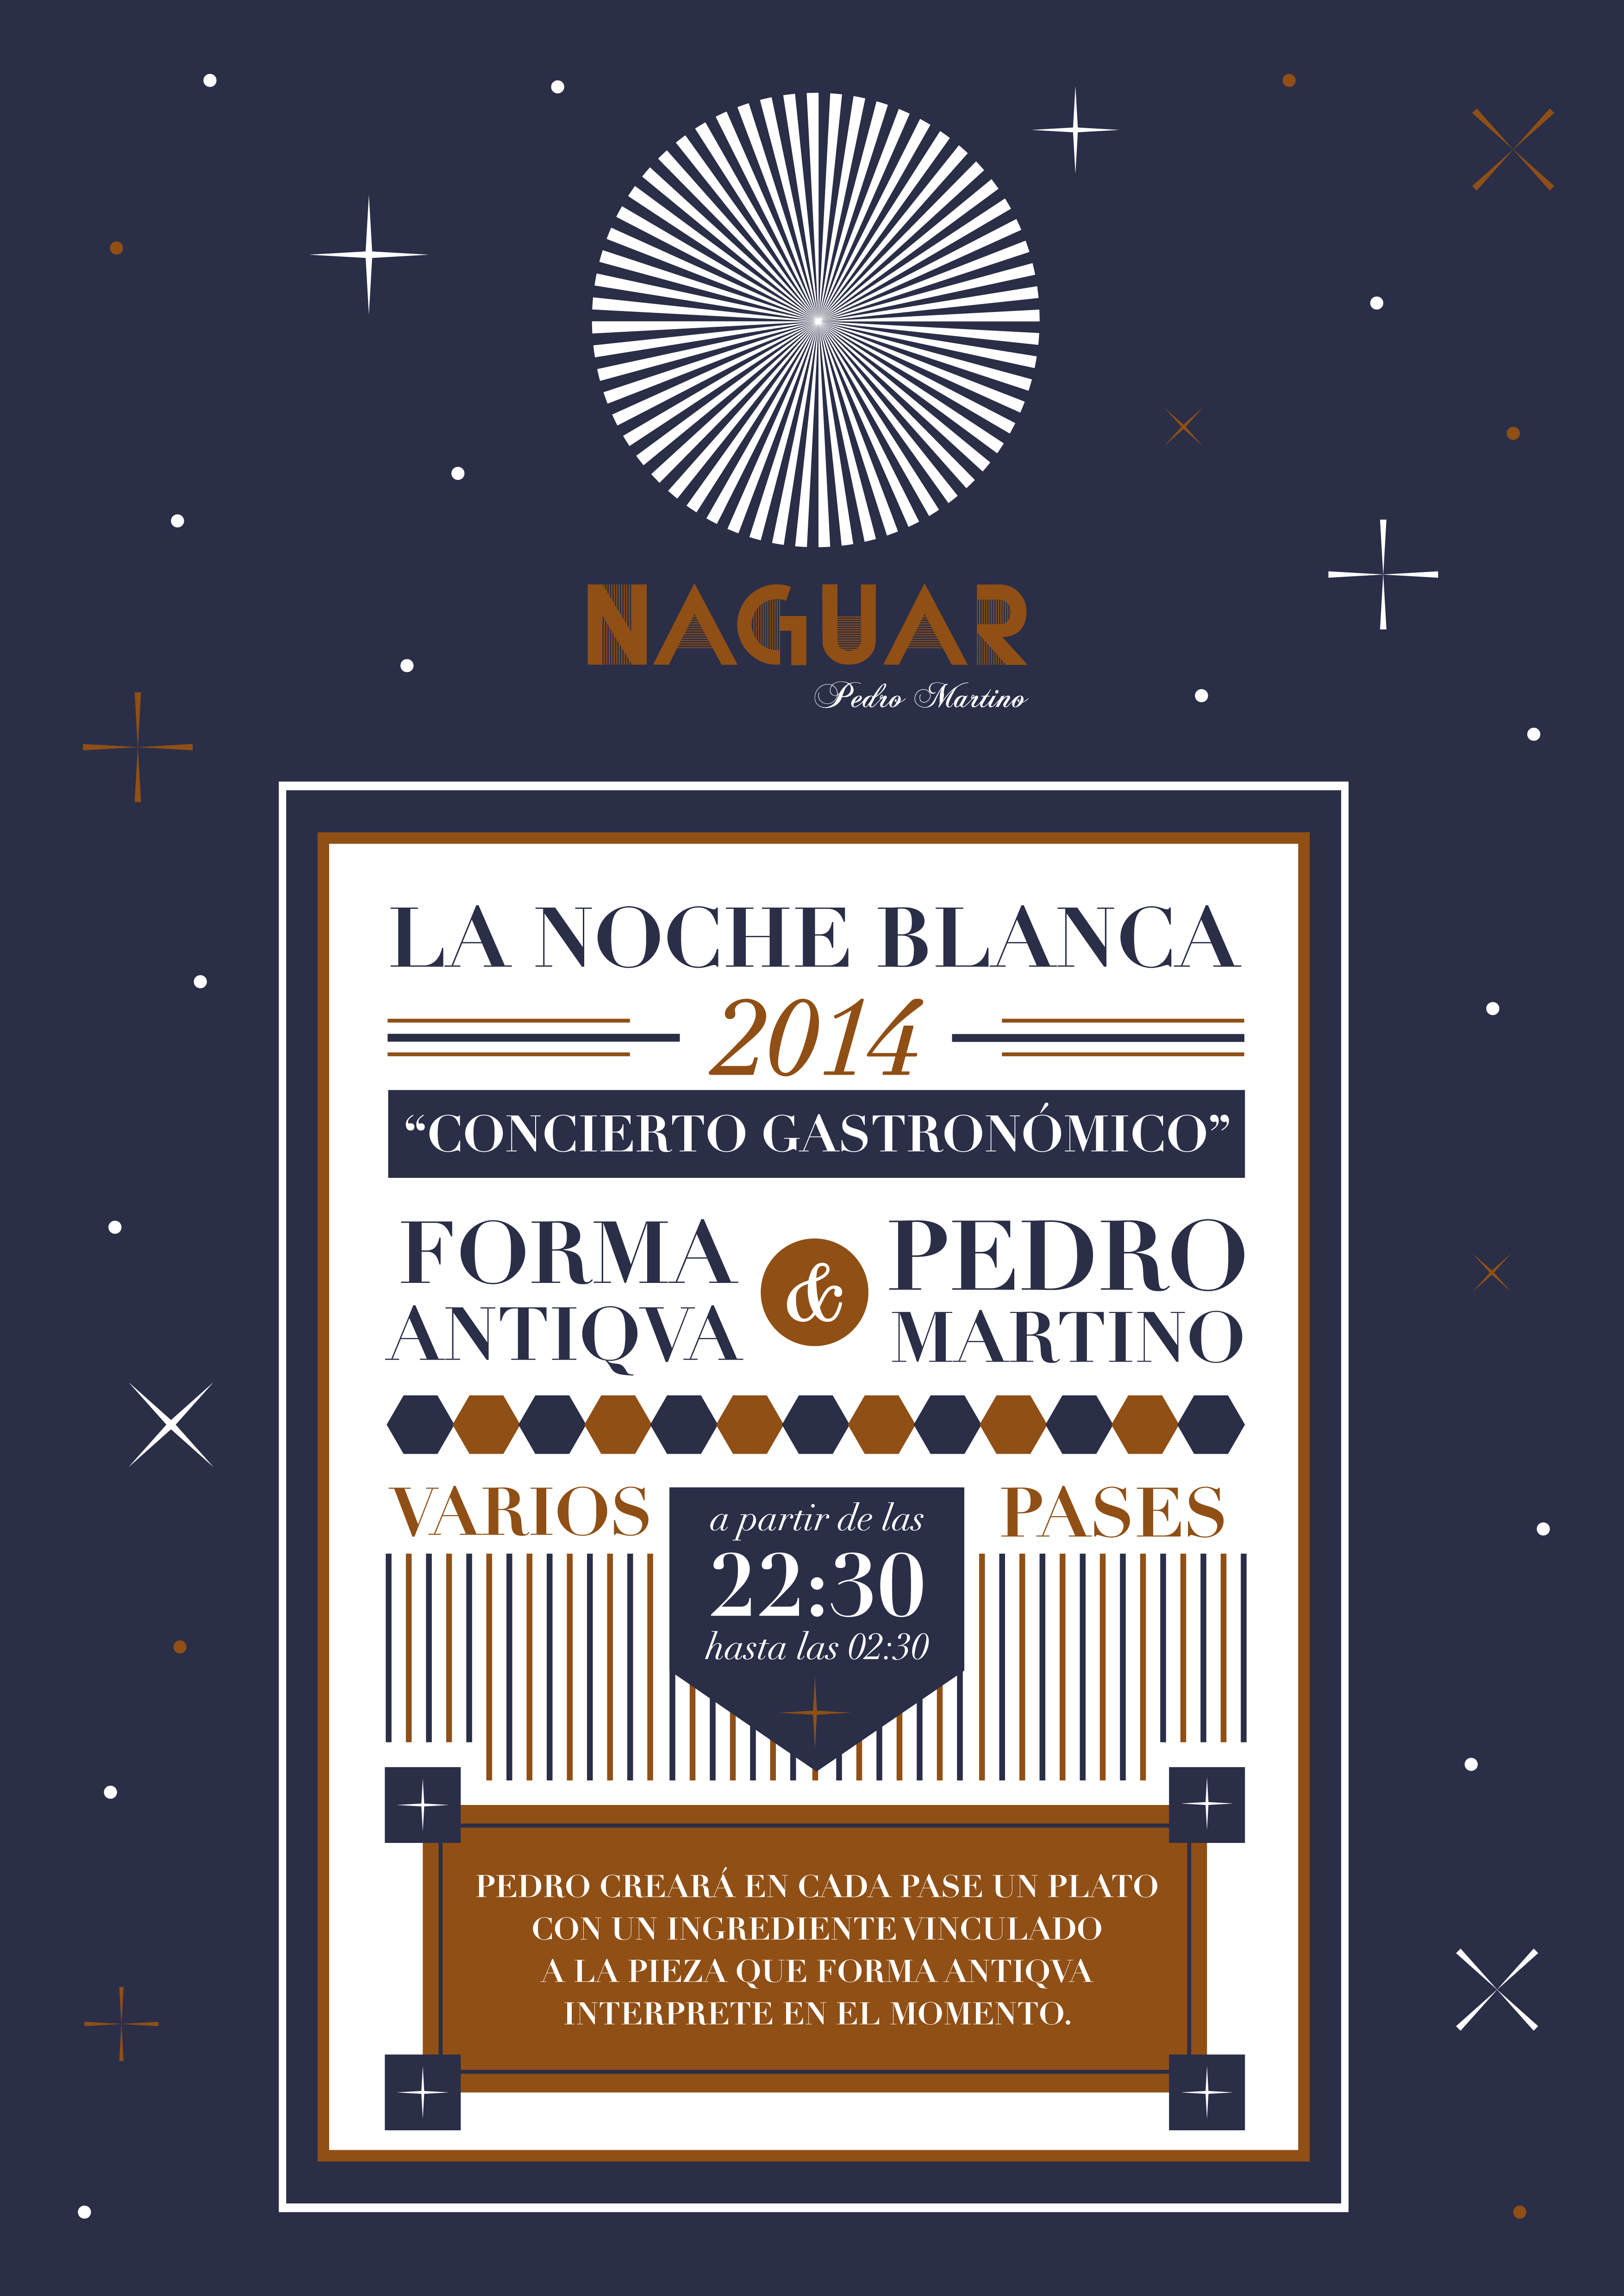 La Noche Blanca Oviedo 2014